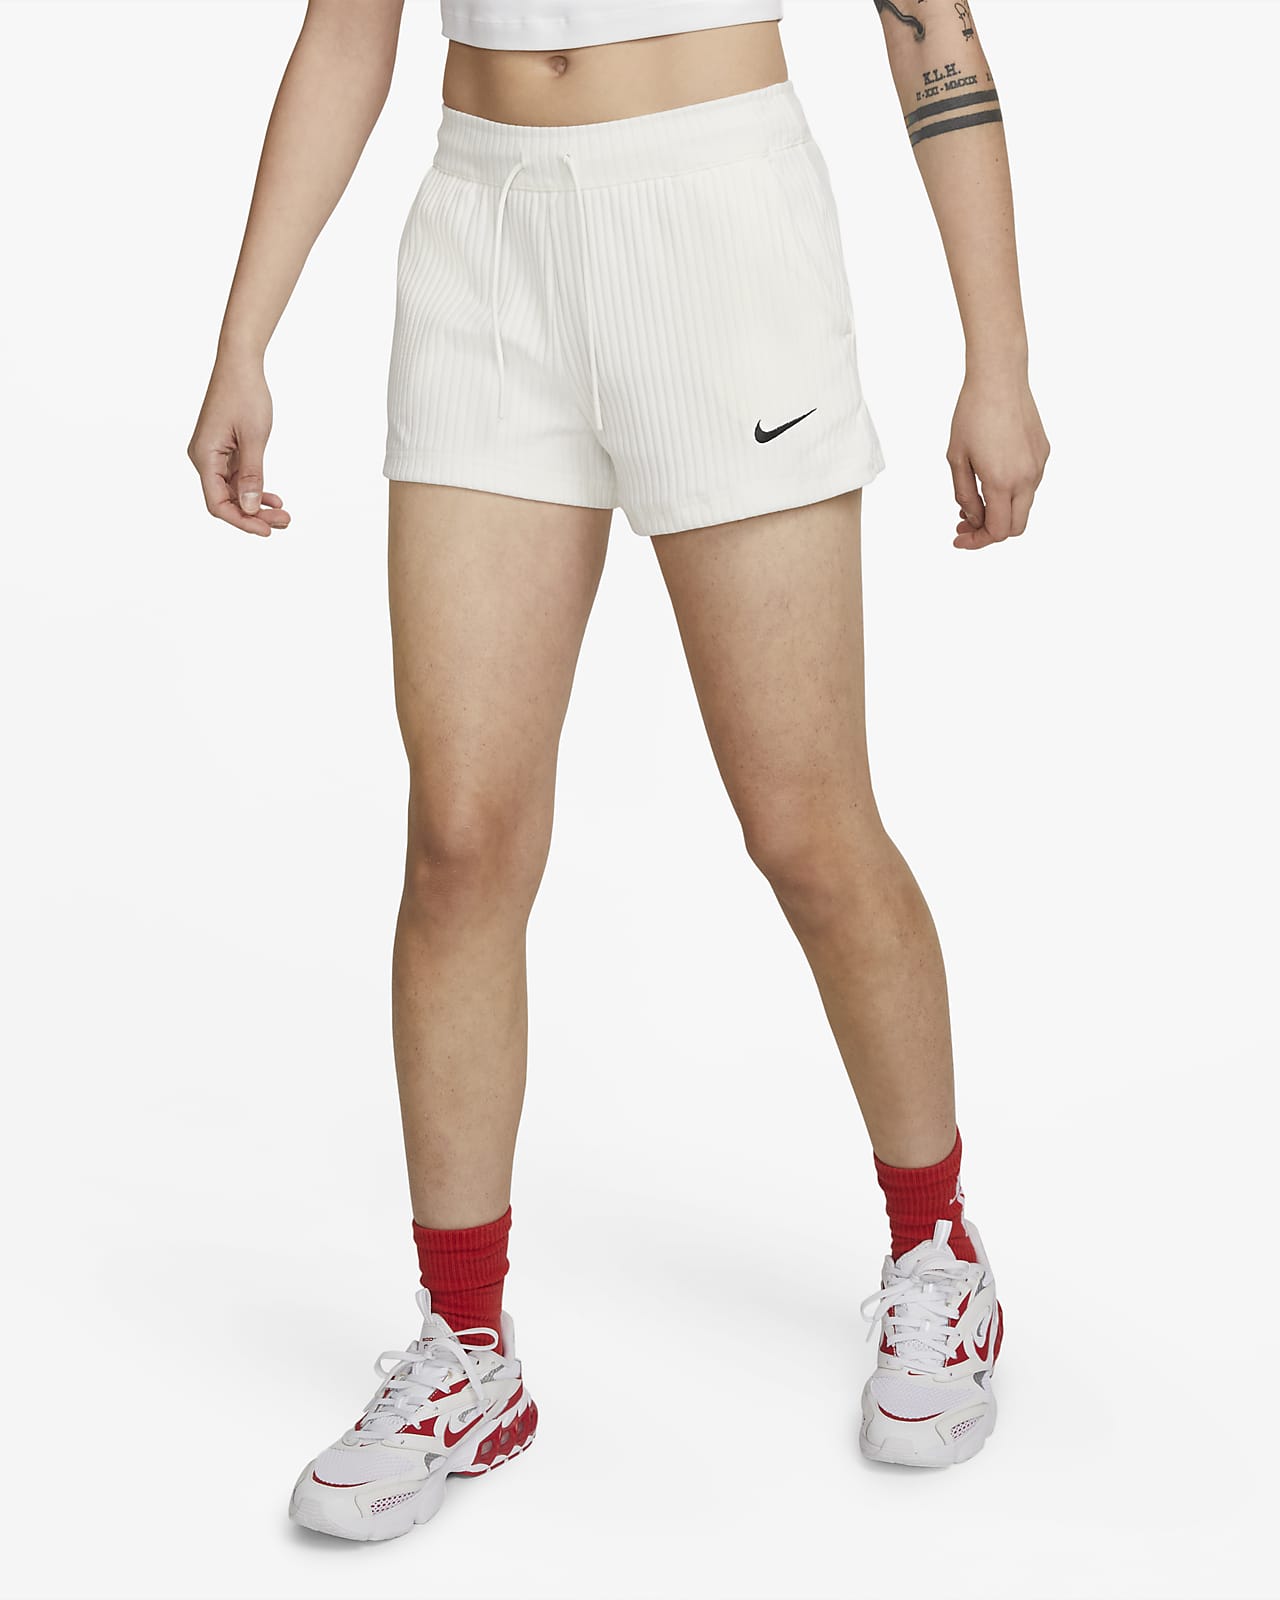 Nike Sportswear Women's High-Waisted Ribbed Jersey Shorts